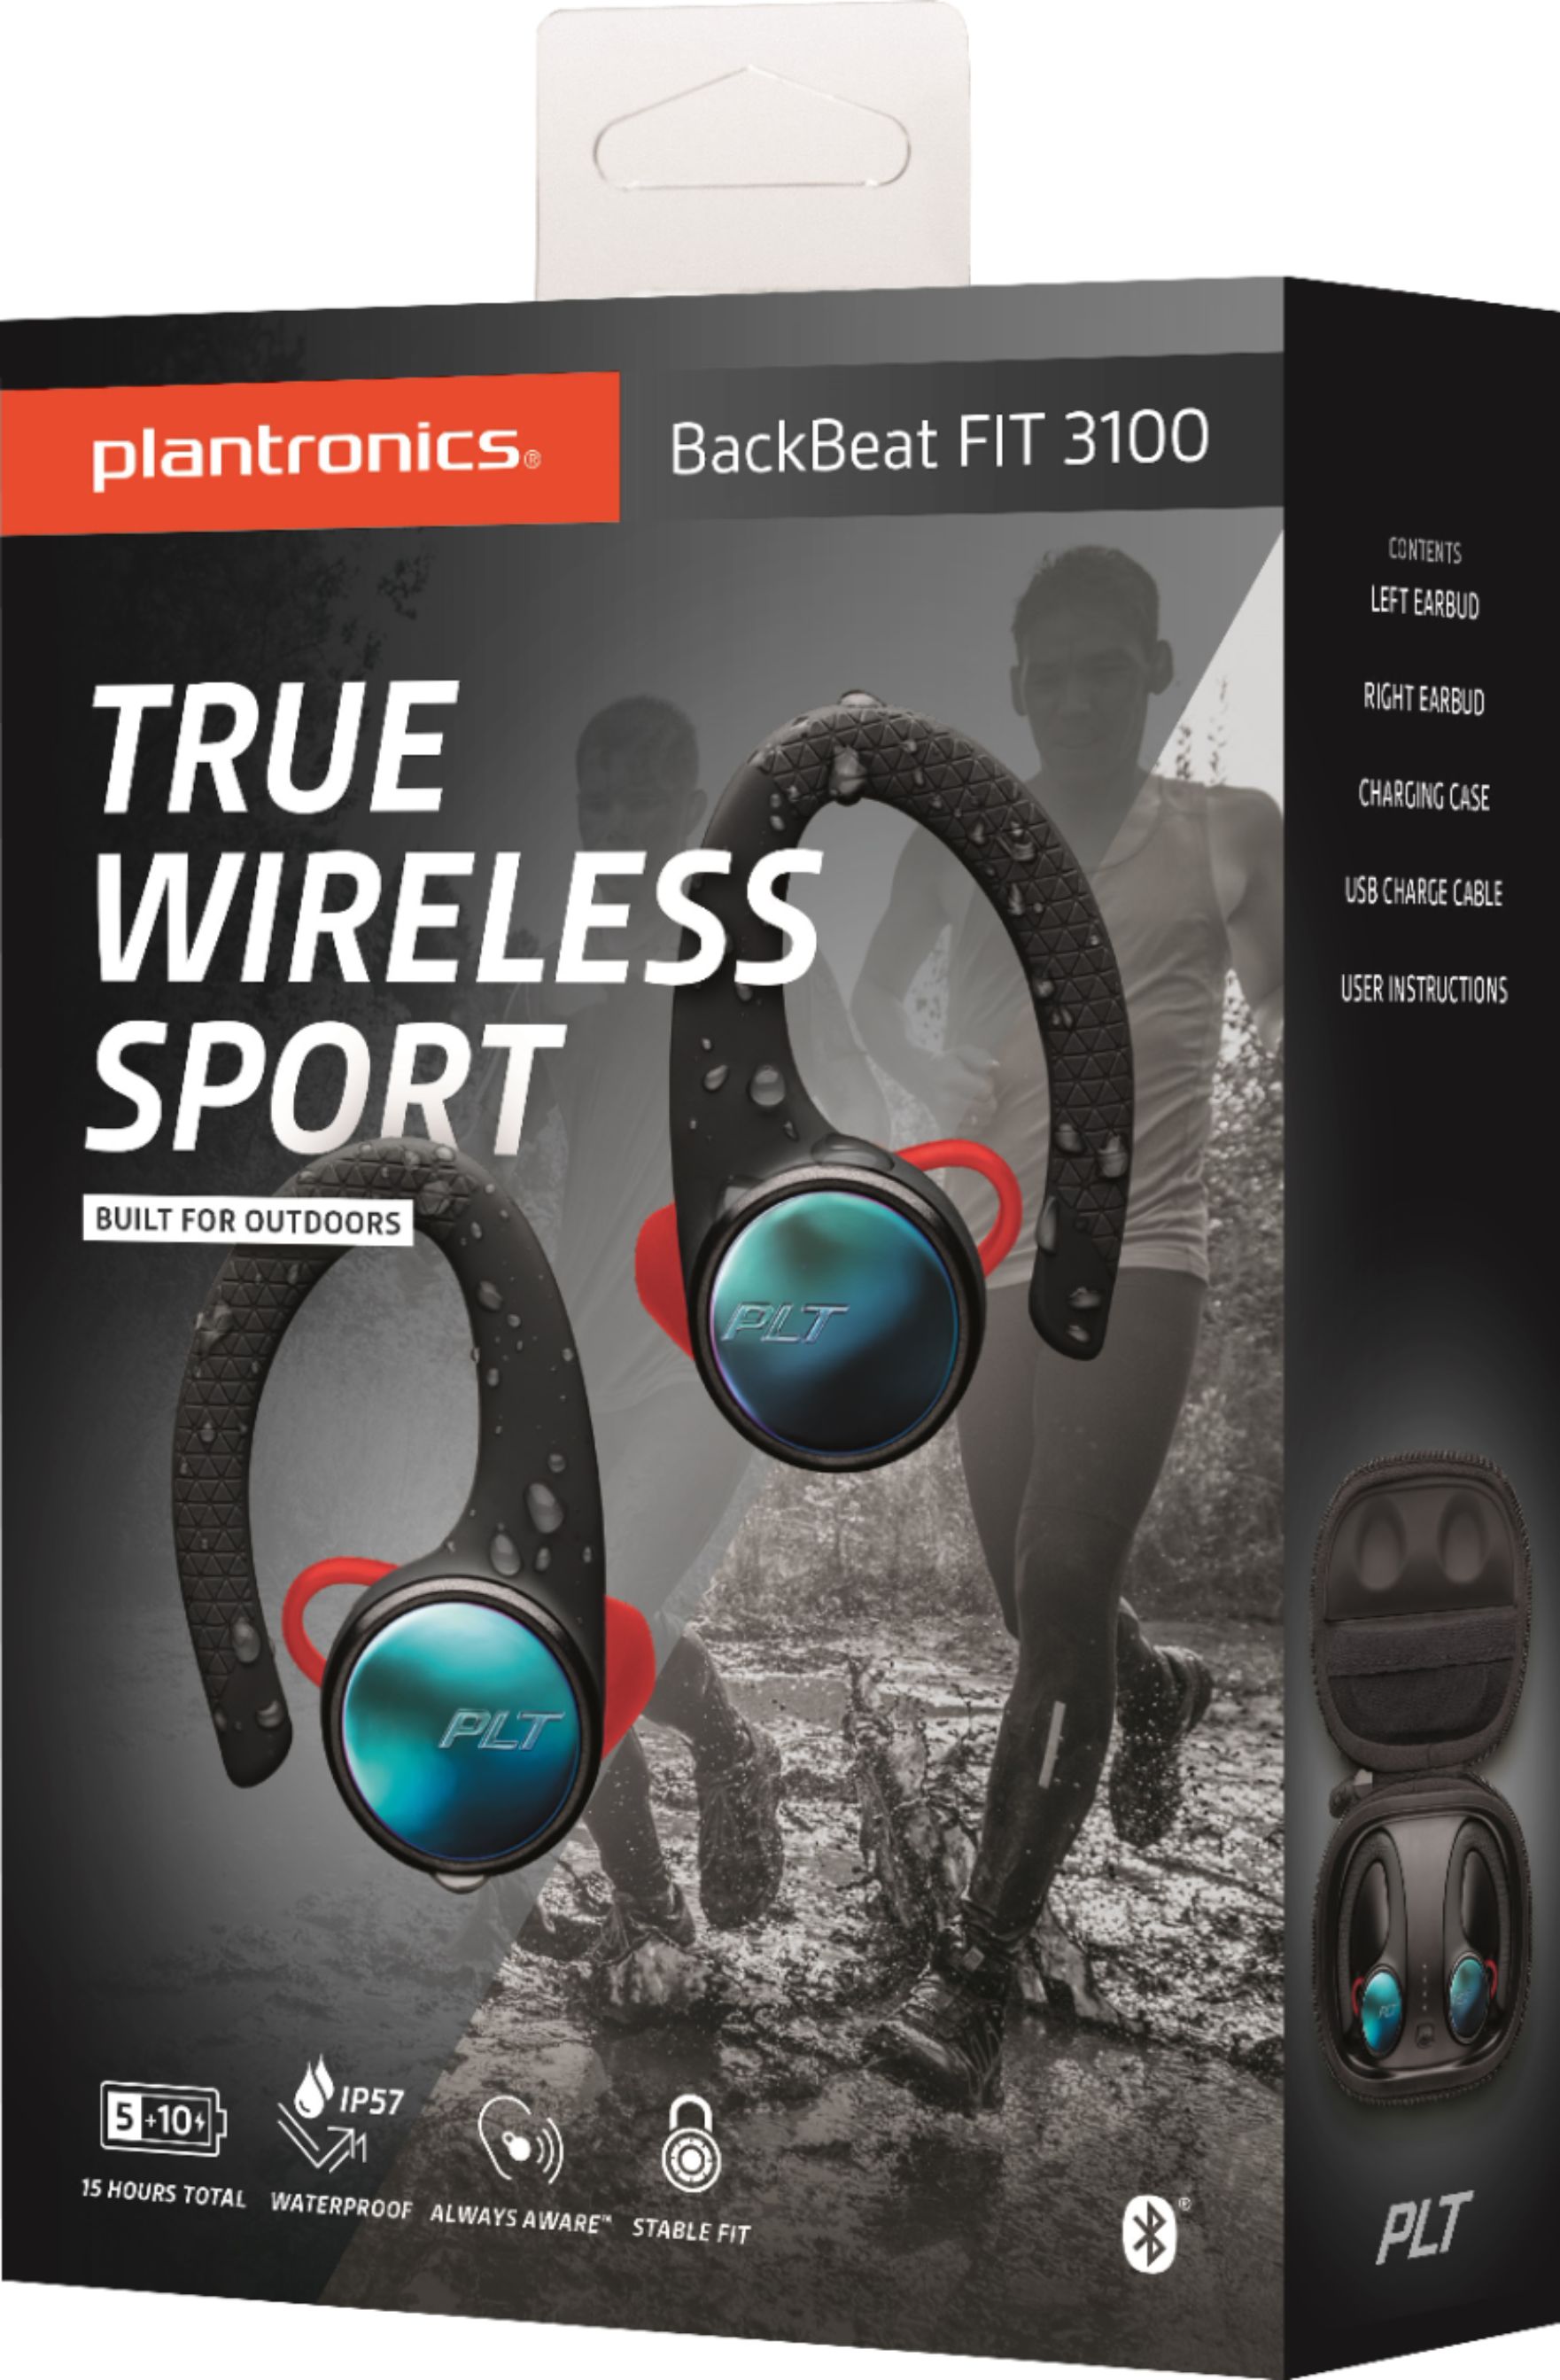 plantronics backbeat fit 3100 true wireless